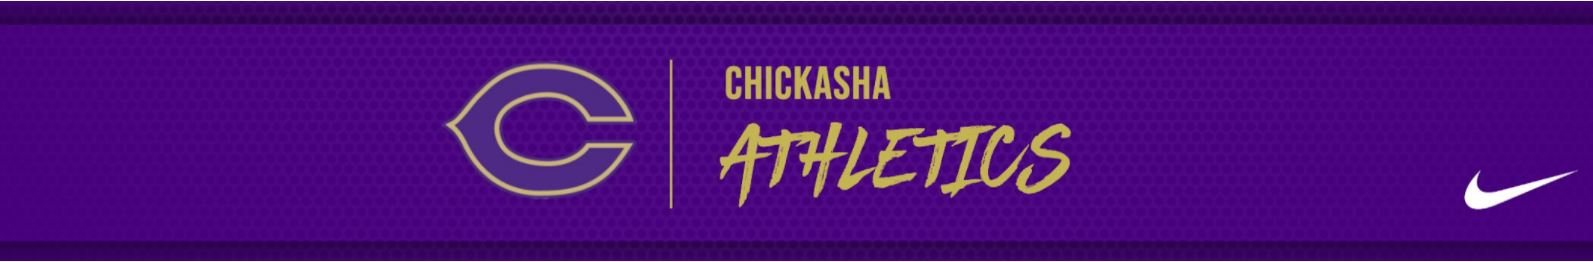 Chickasha Athletics YouTube Channel 